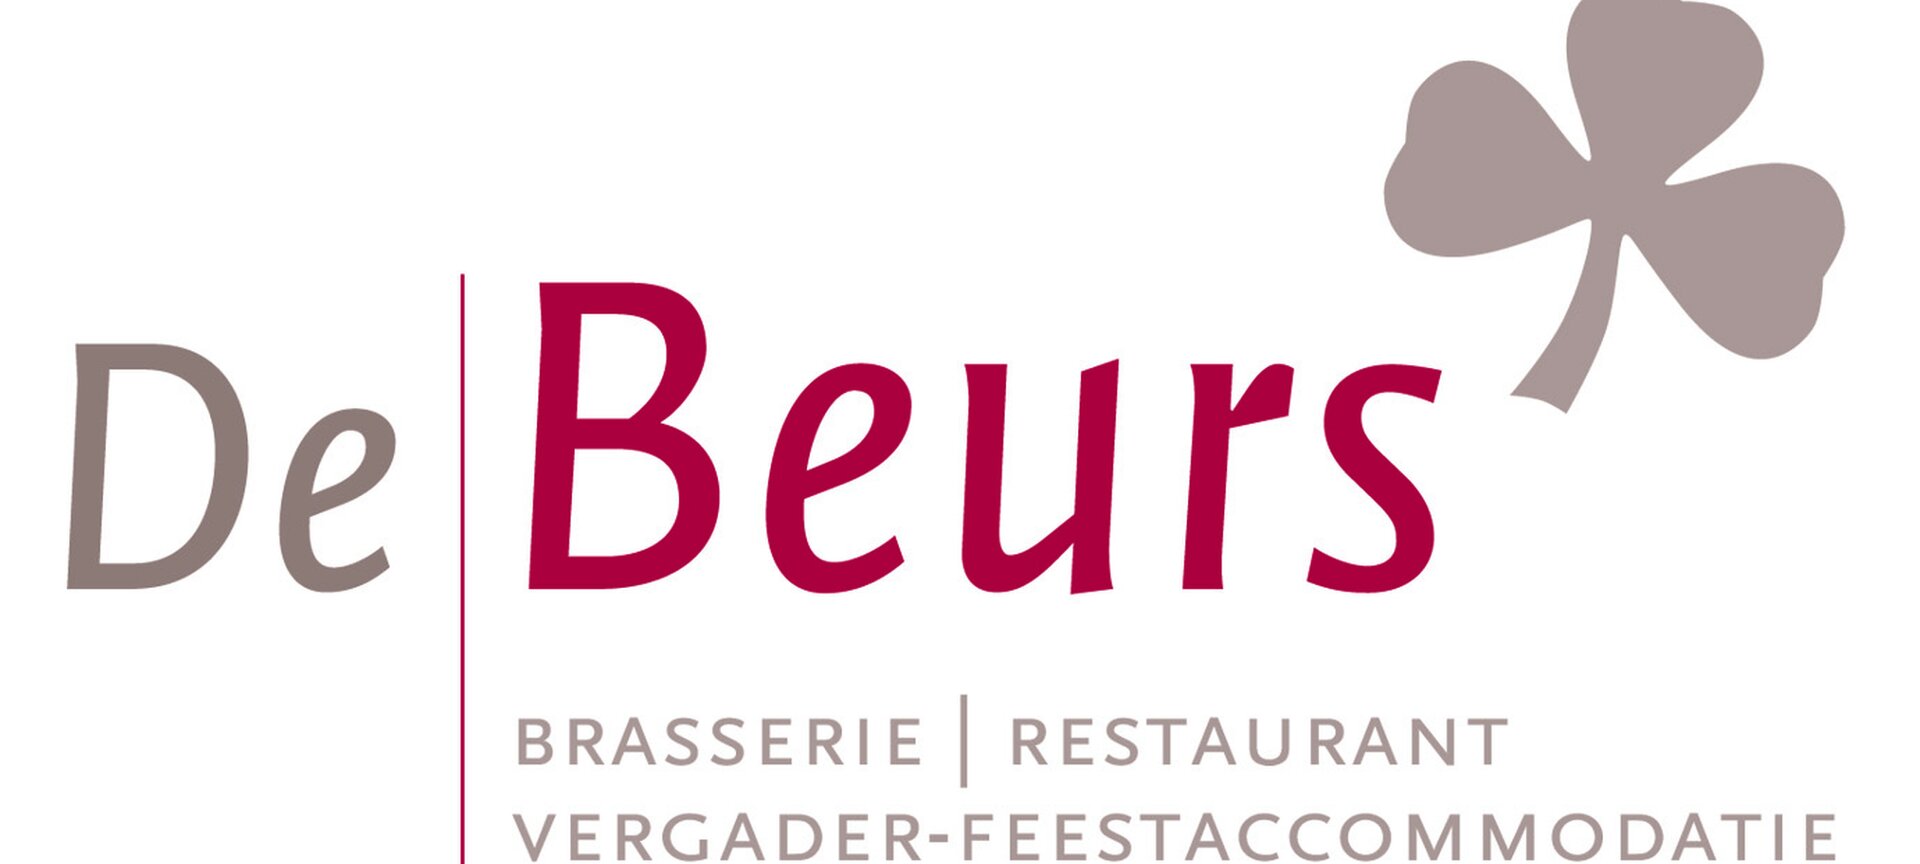 De Beurs - Brasserie - Restaurant - Logo